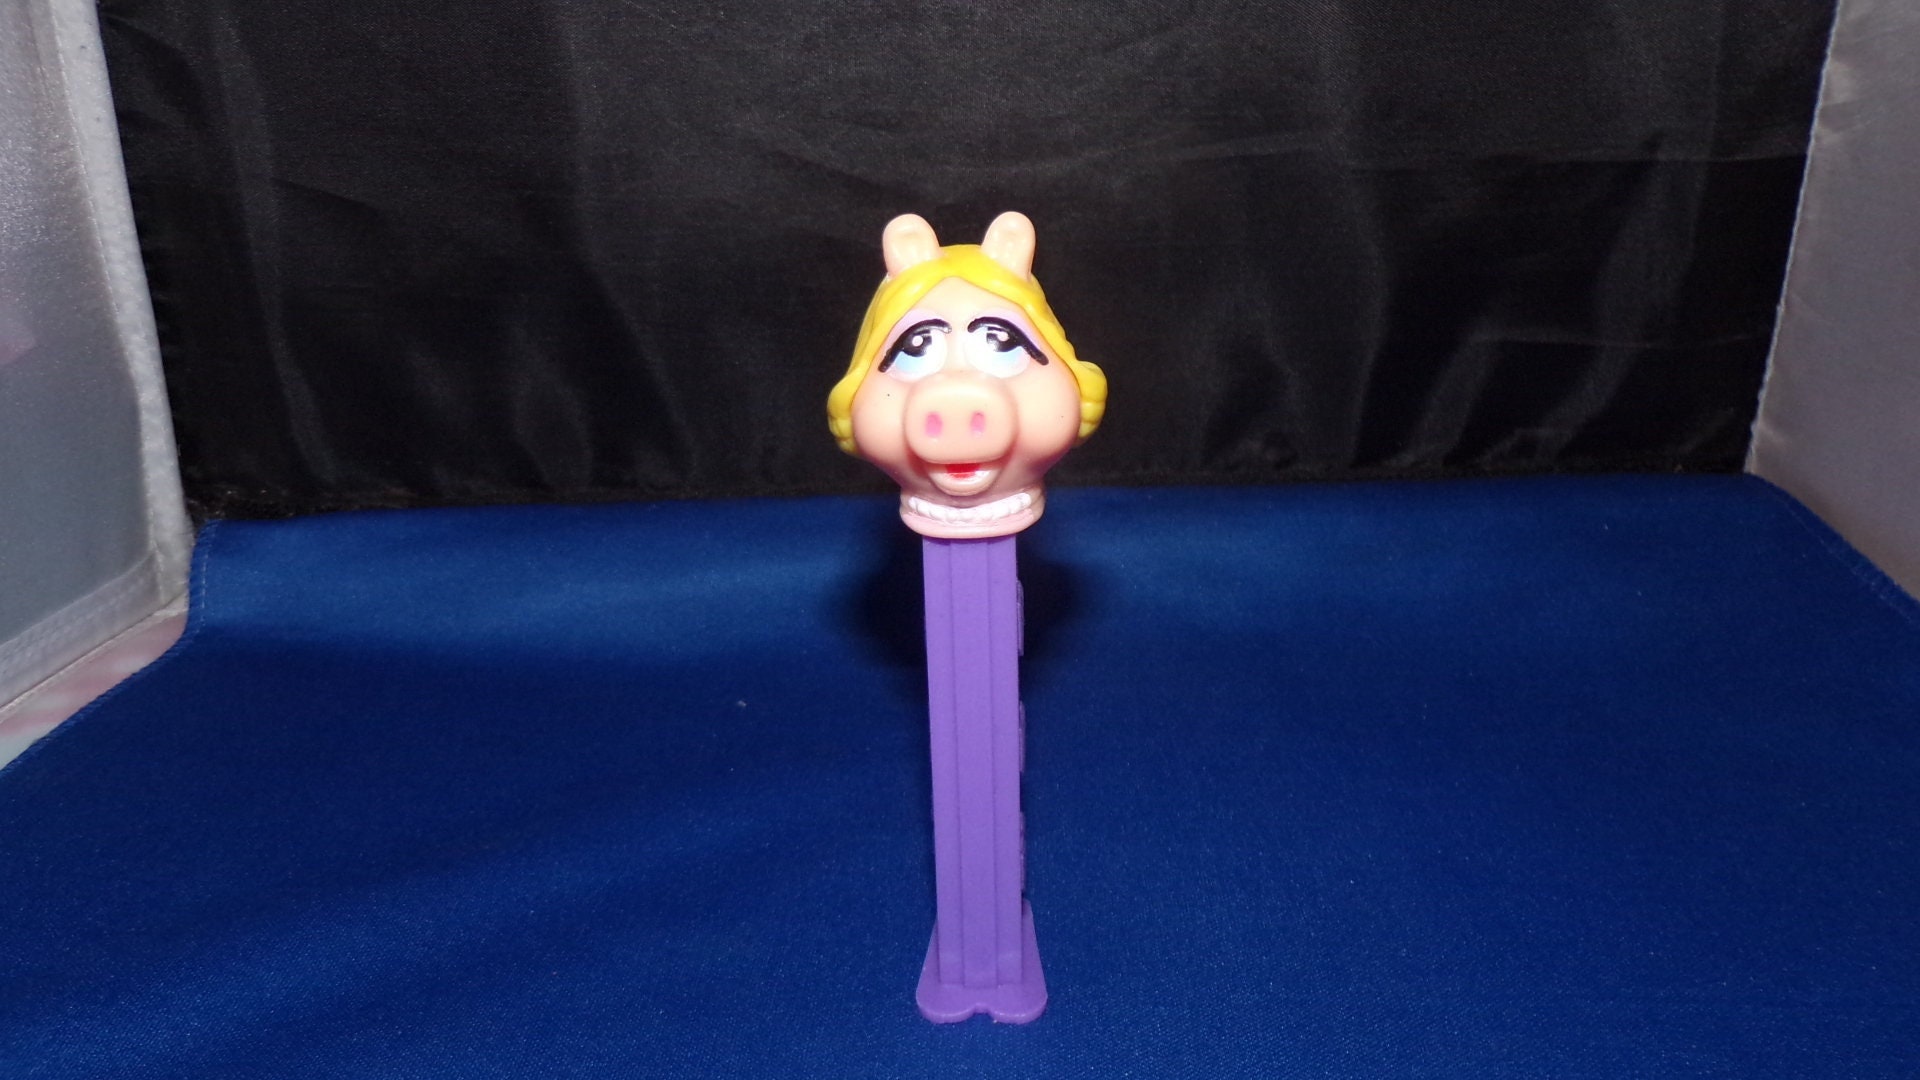 Miss Piggy PEZ Dispenser & Candy - Muppets - PEZ Online Store – PEZ Candy